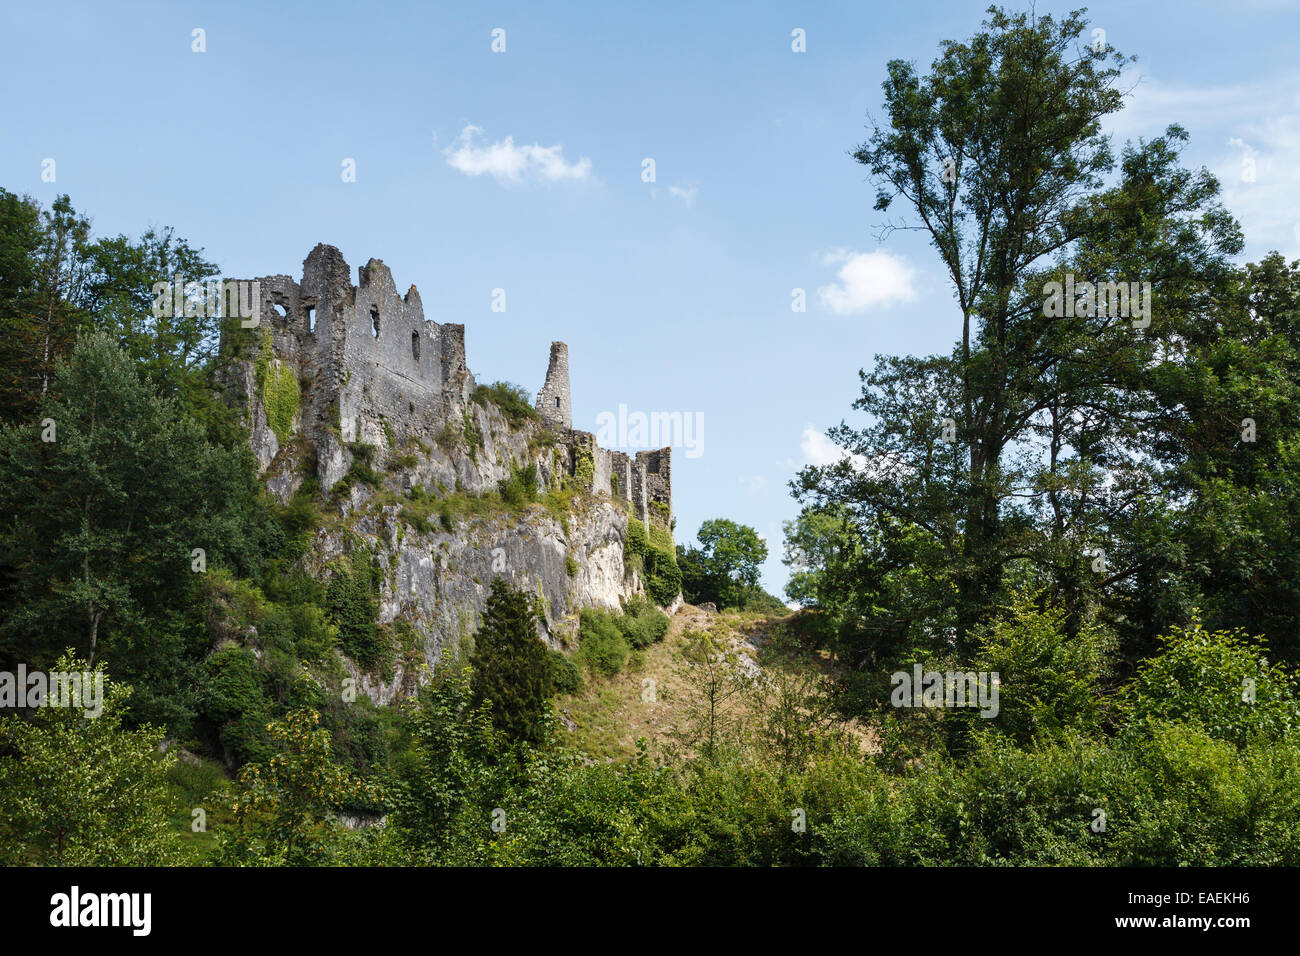 Château de Montaigle, near Warnant, Wallonia, Belgium Stock Photo